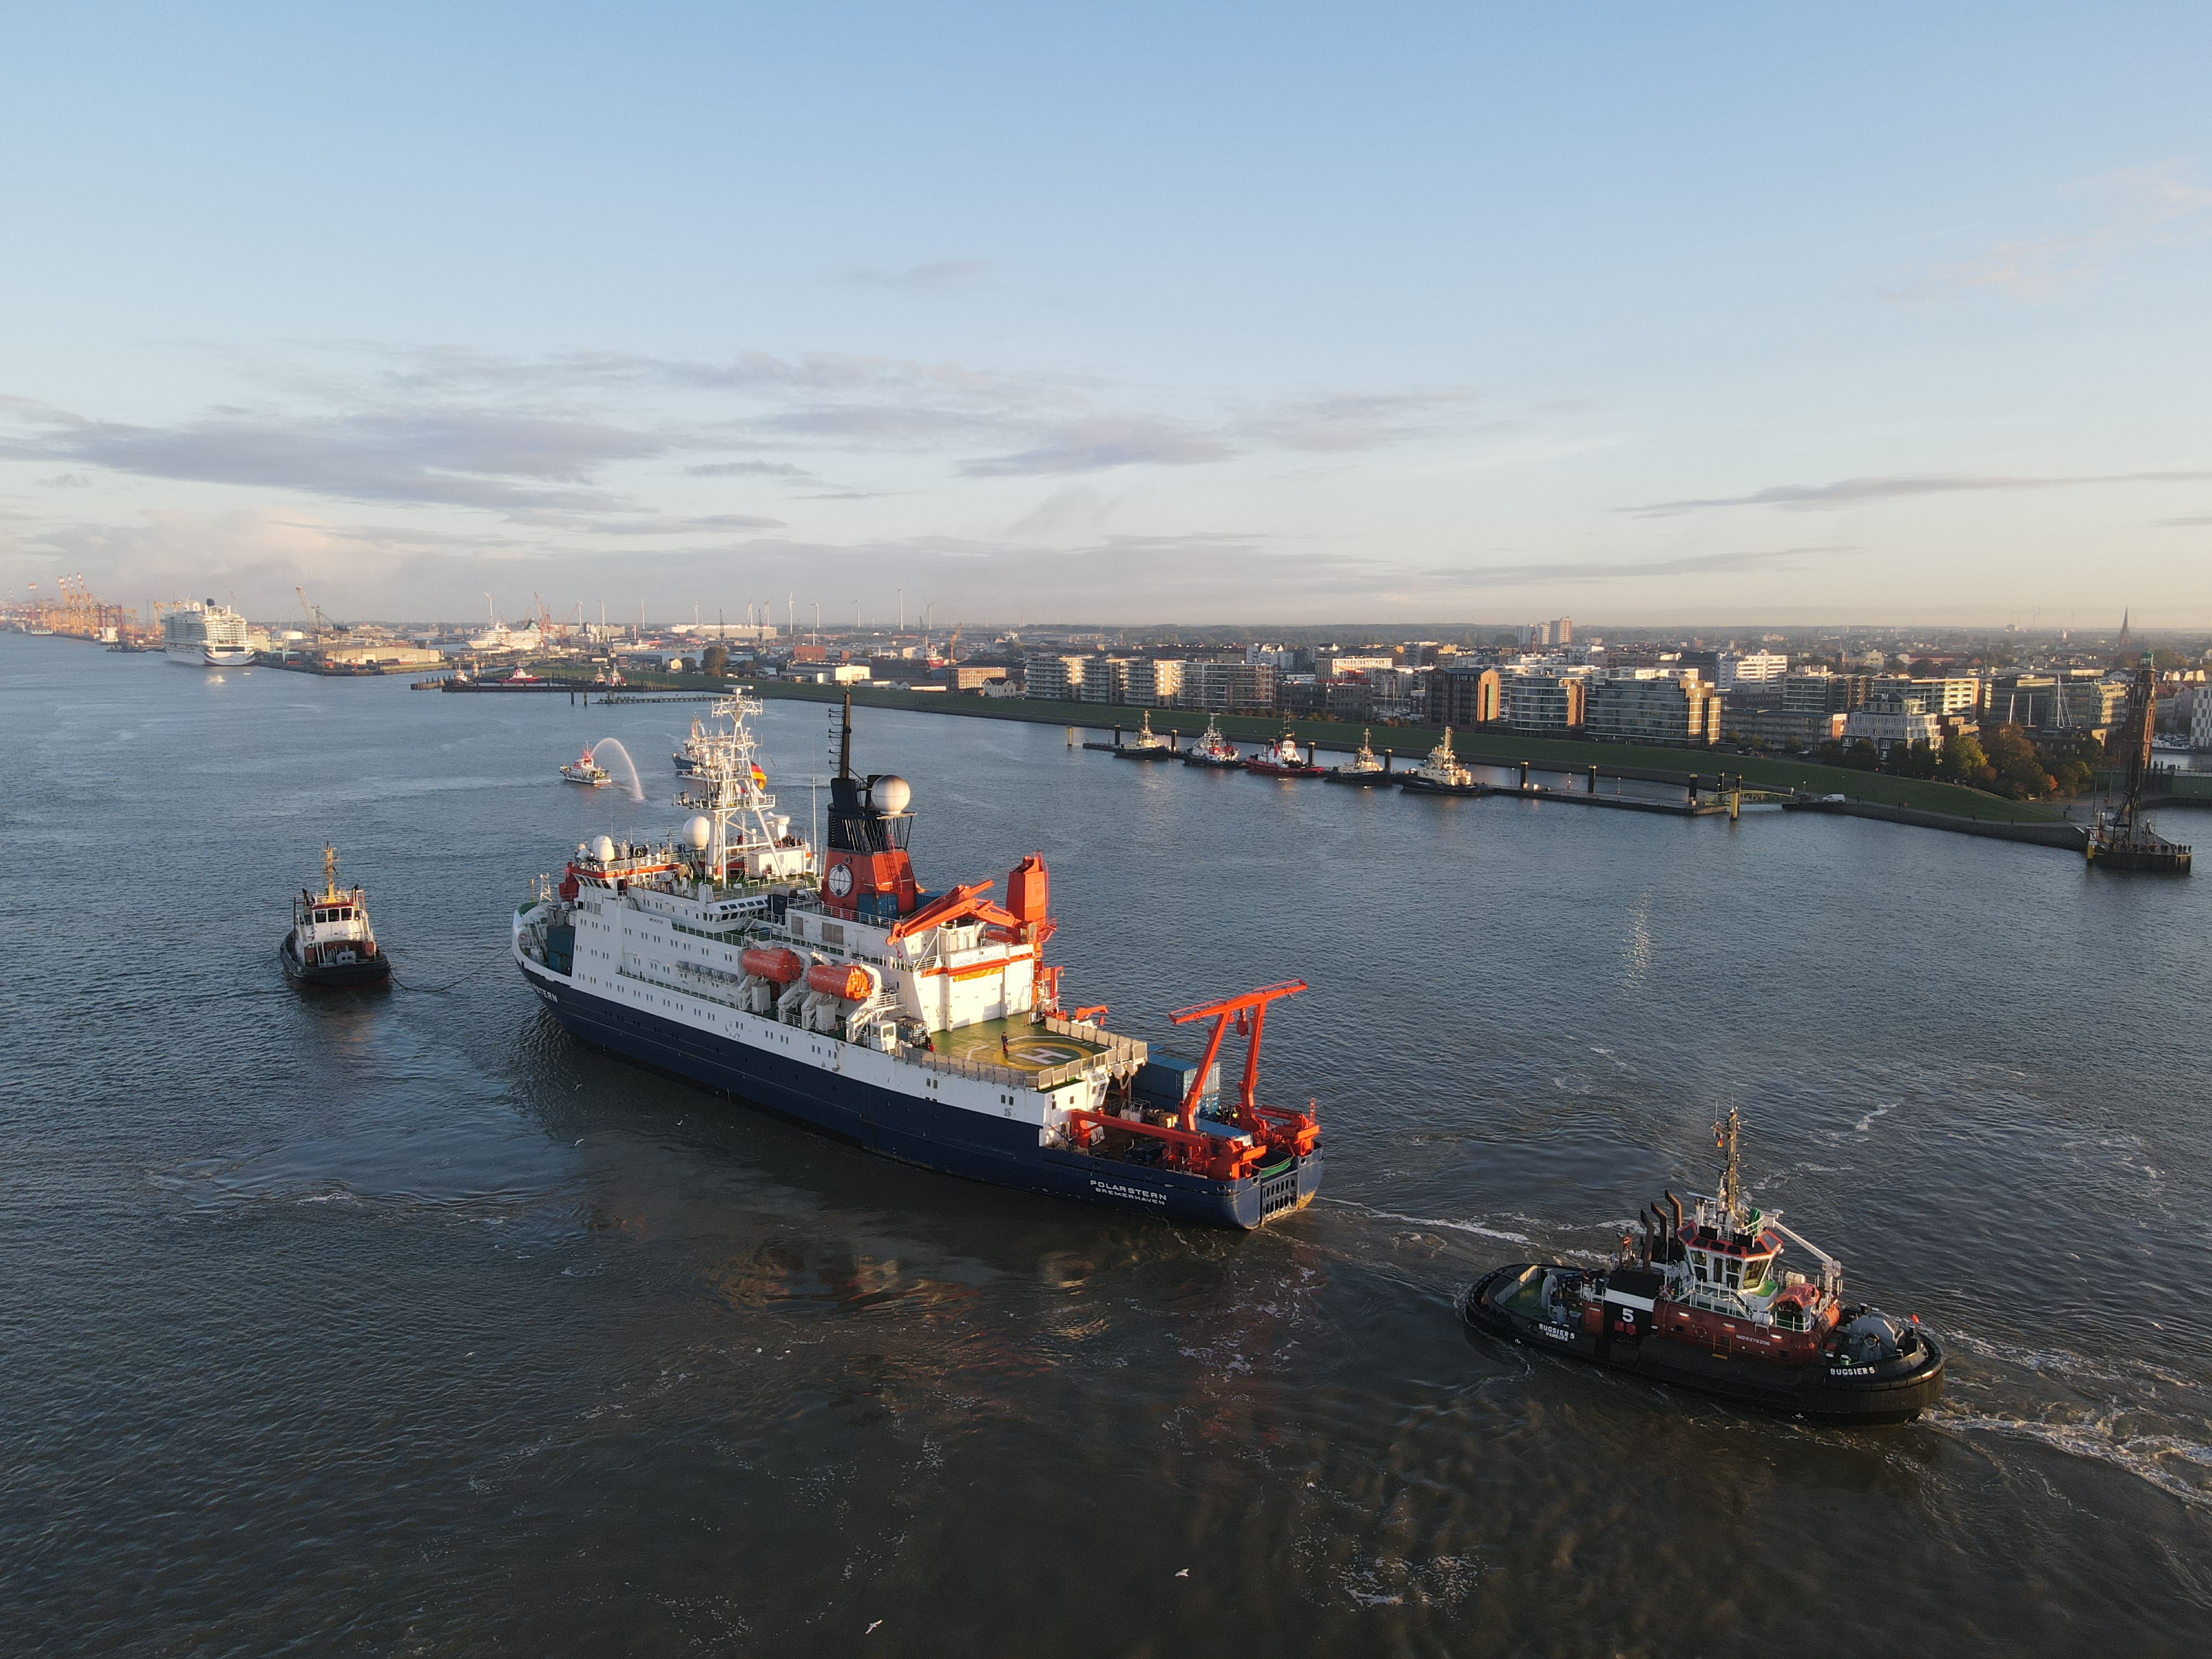 The R/V Polarstern arrives in Bremerhaven, Germany